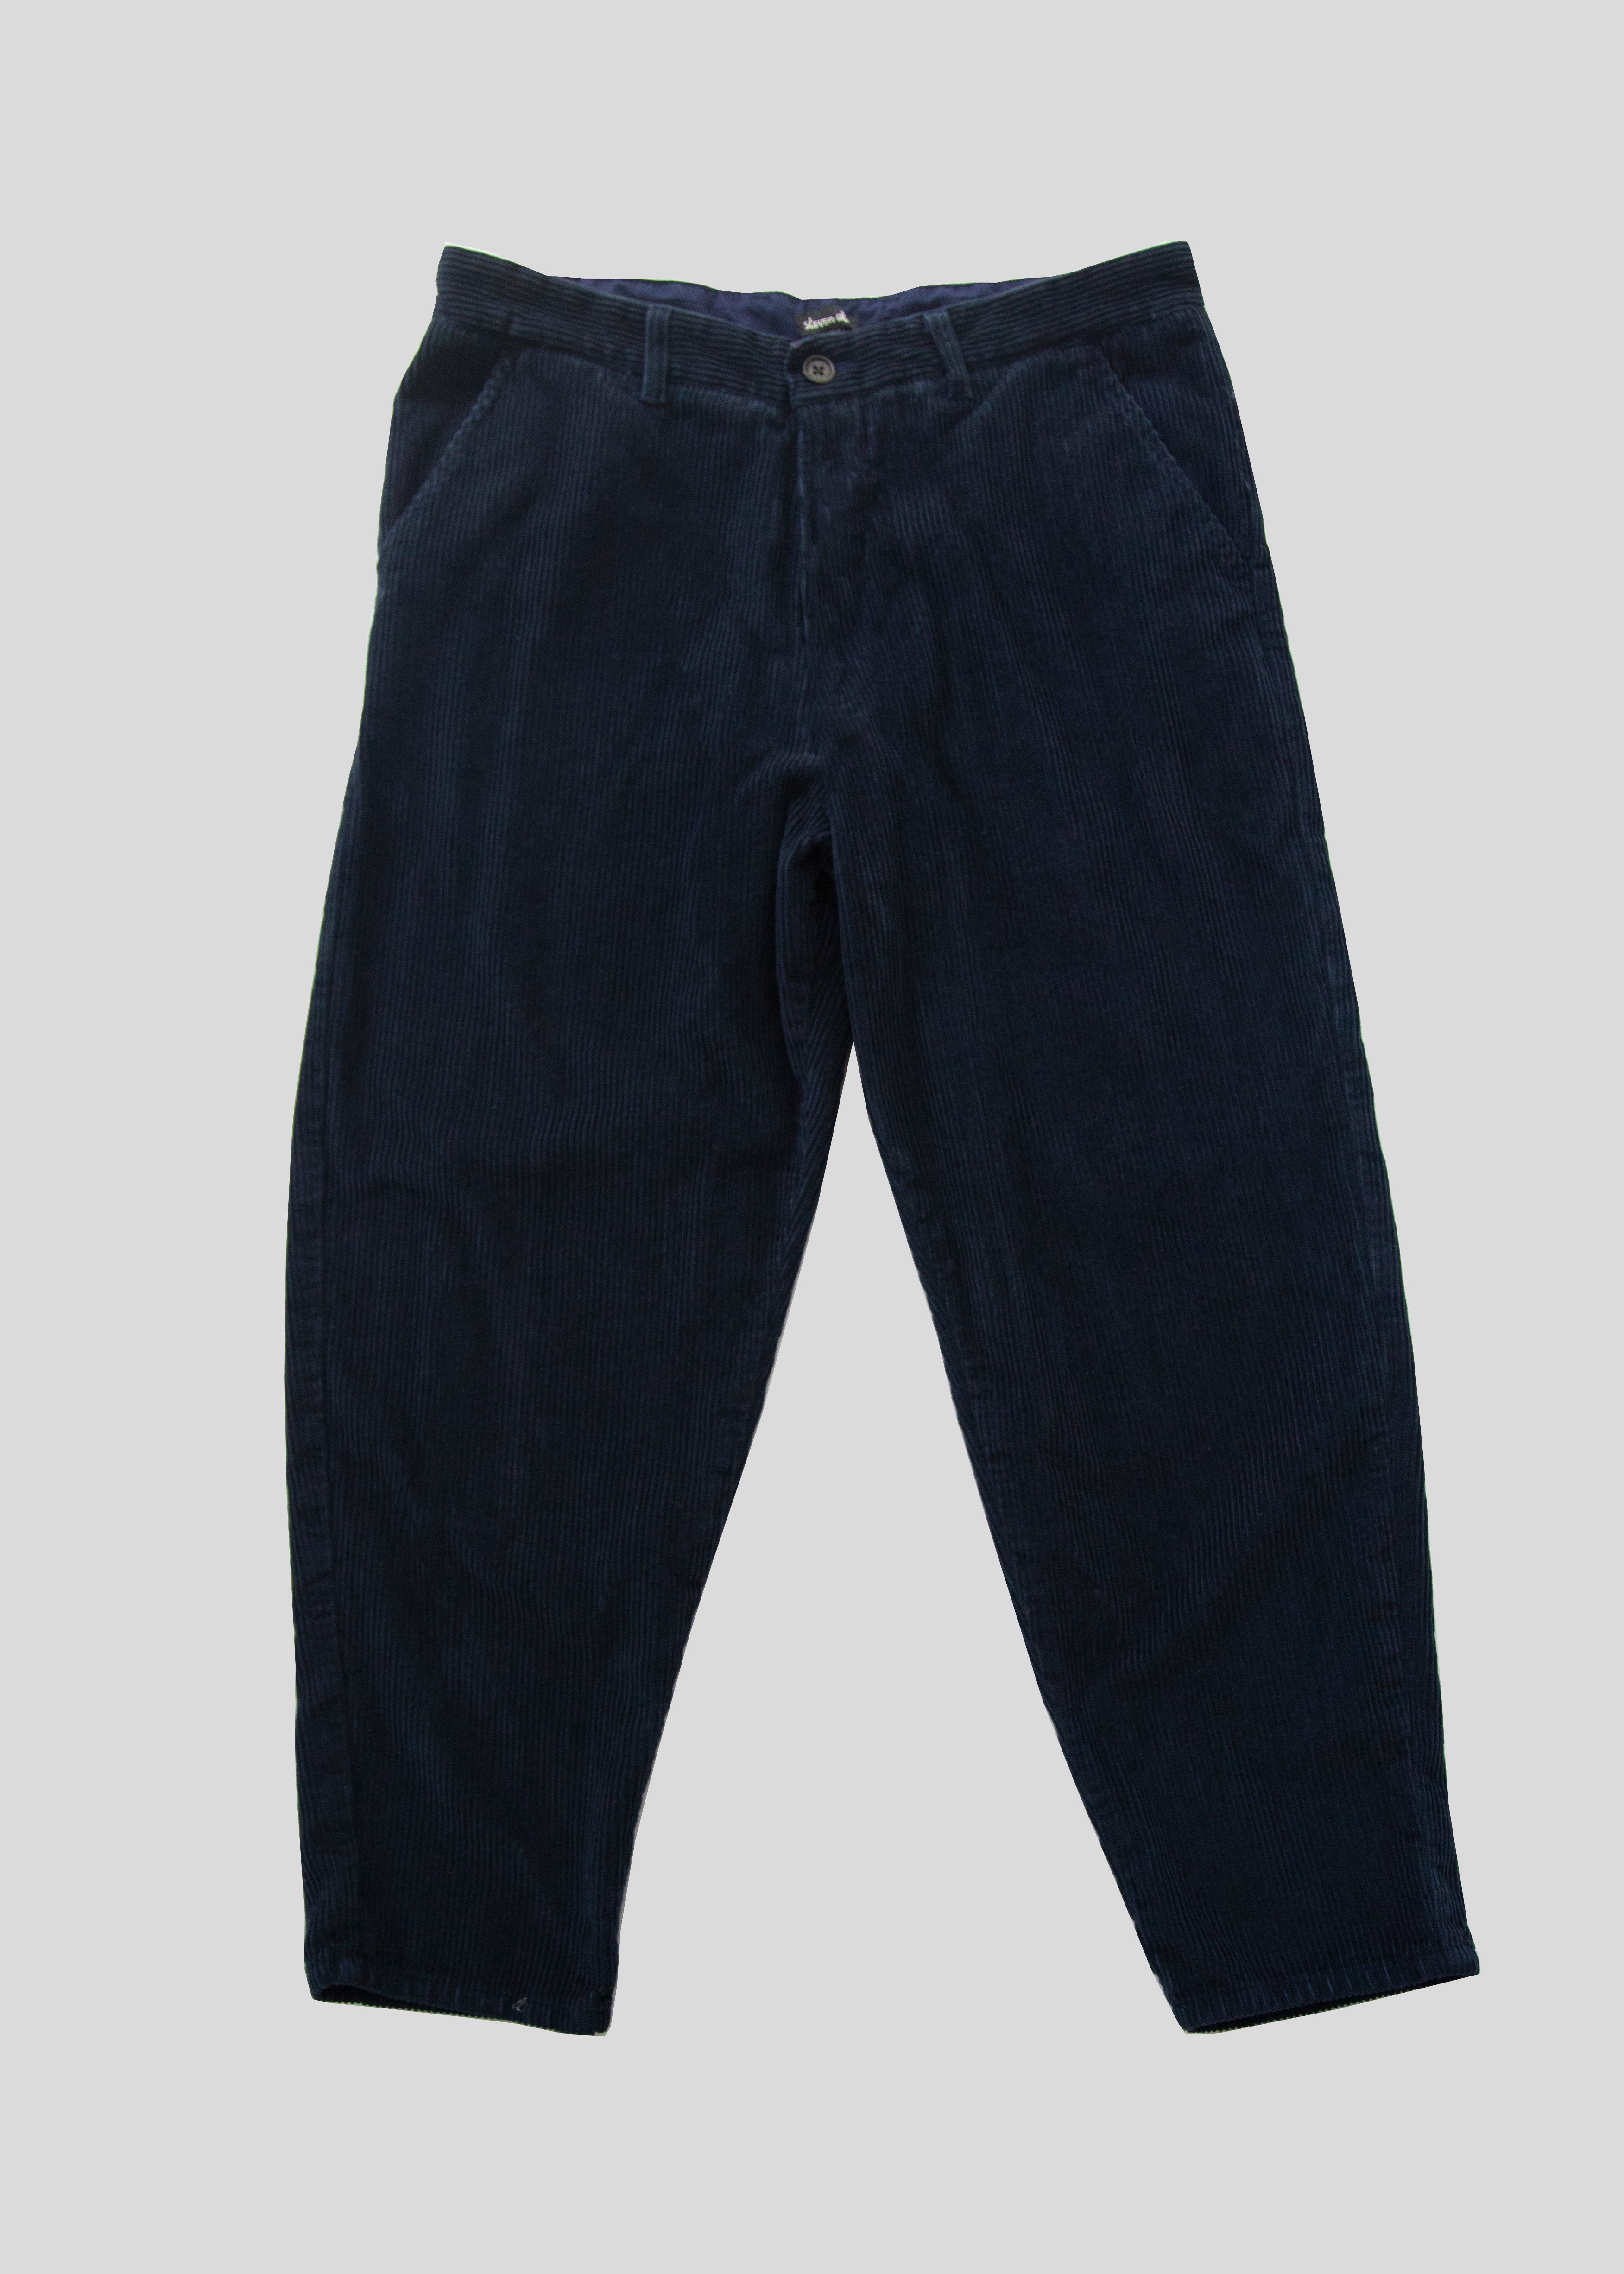 Lois Jeans Online Shop | Sierra Thin Navy Corduroy Trousers